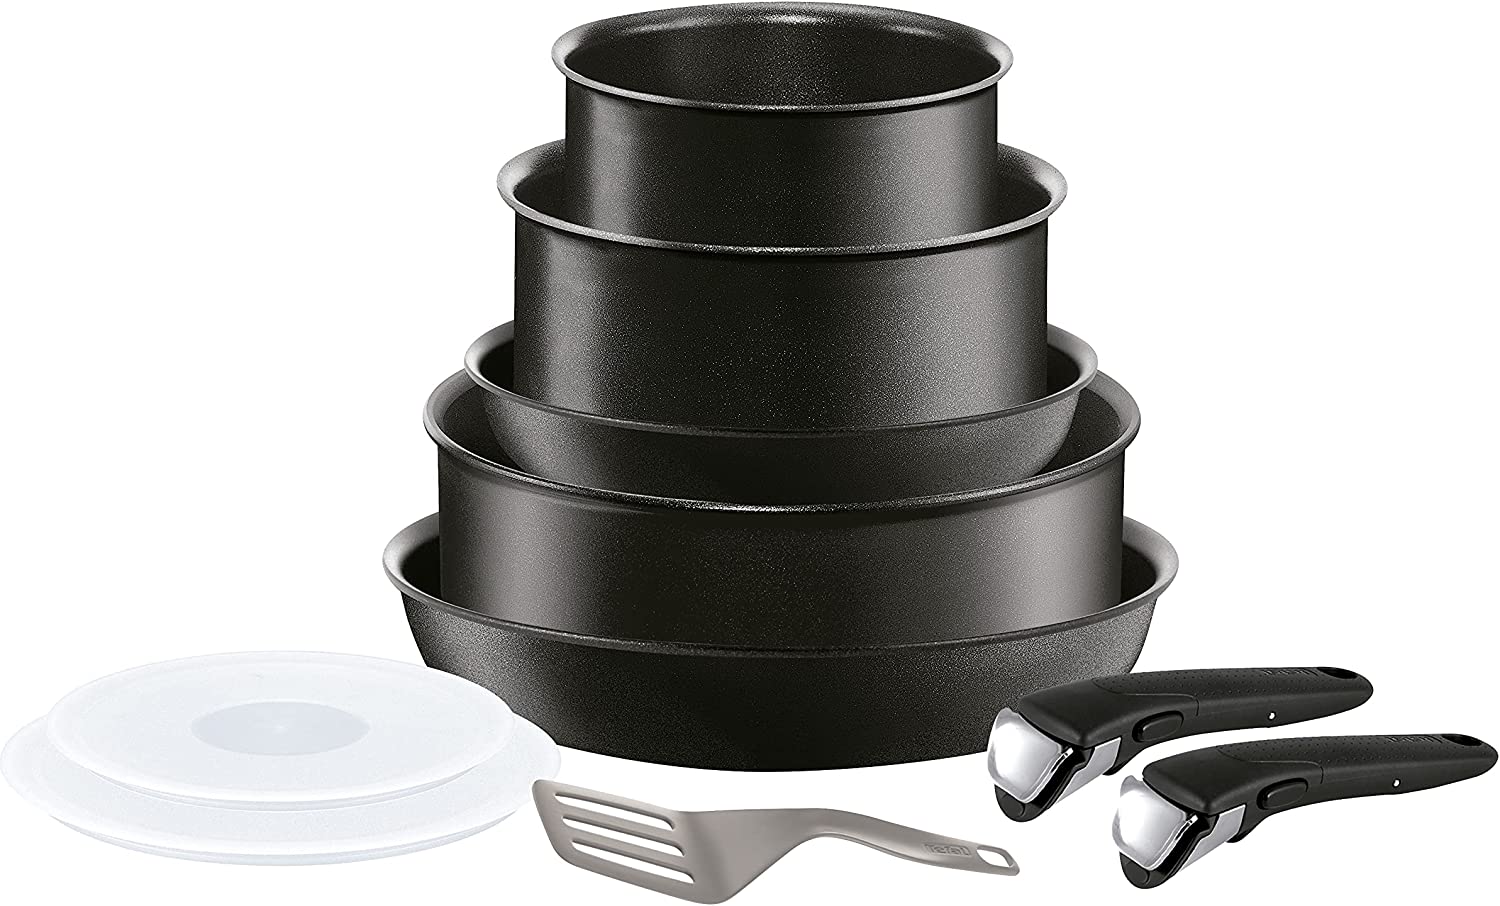 Tefal L6549102 Performance pan and pot set 5-piece, non-stick sealed, induction-suitable, starter set, black